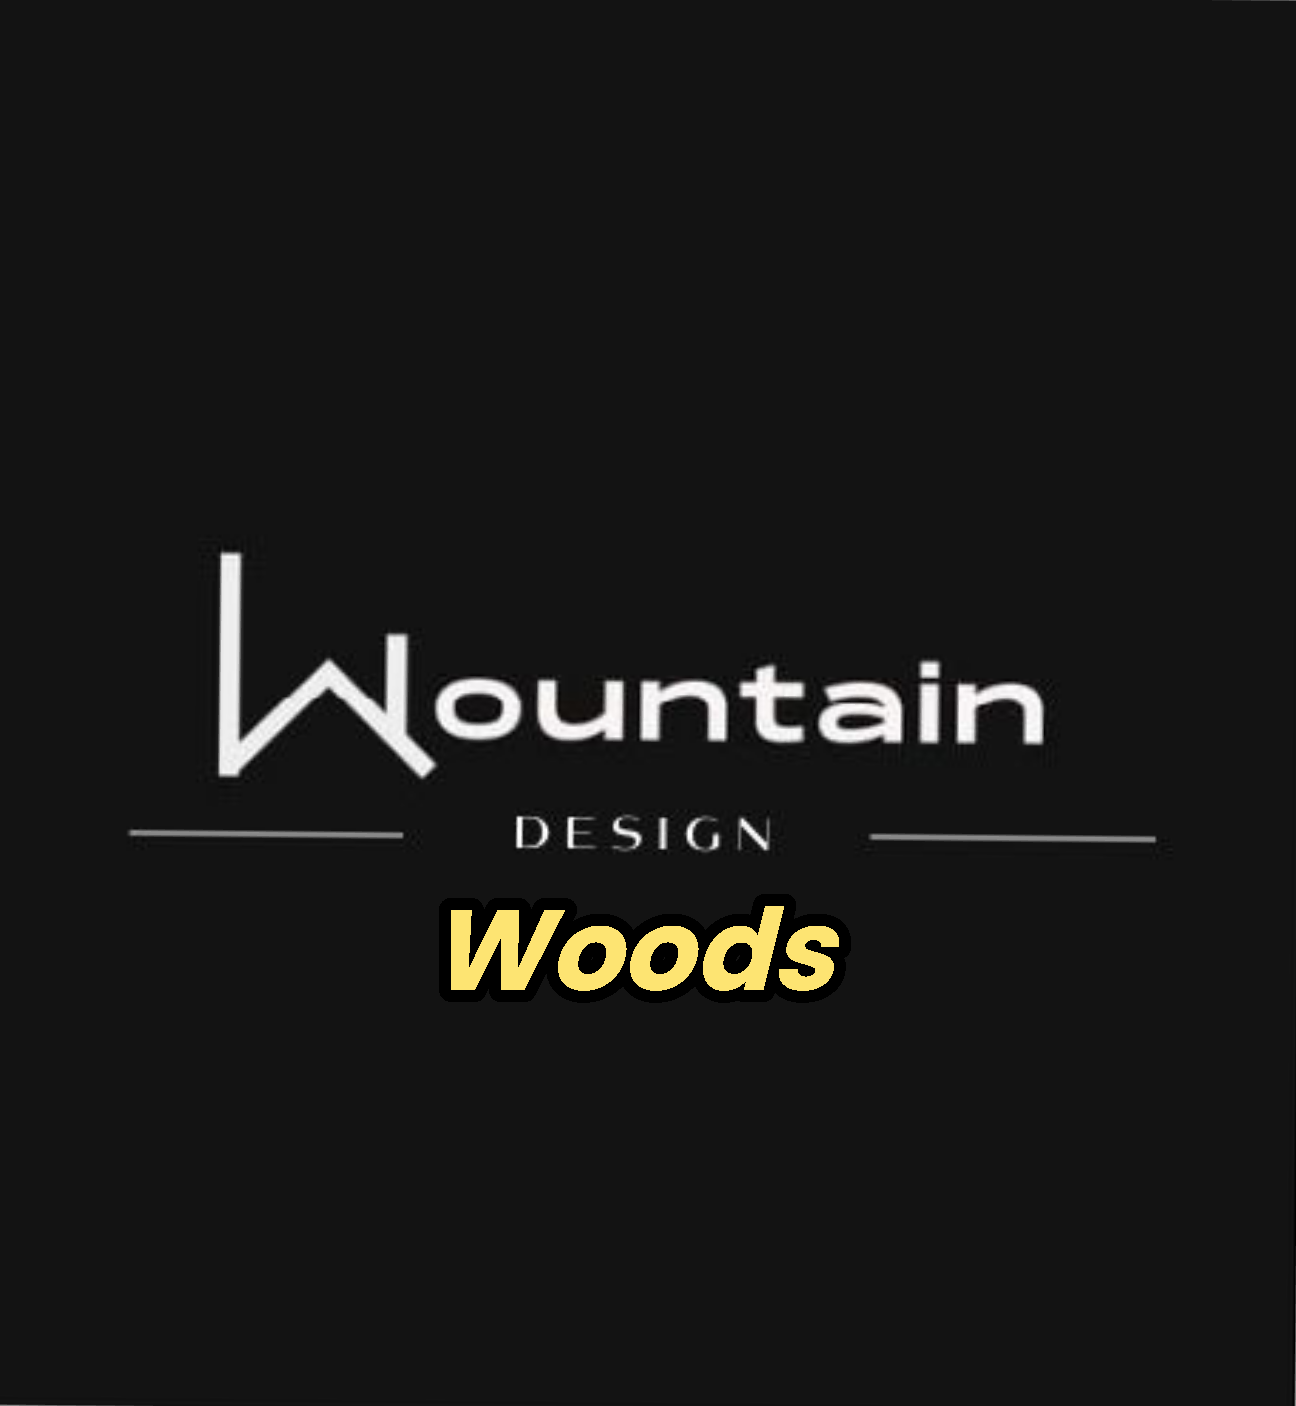 Mountain design Woods